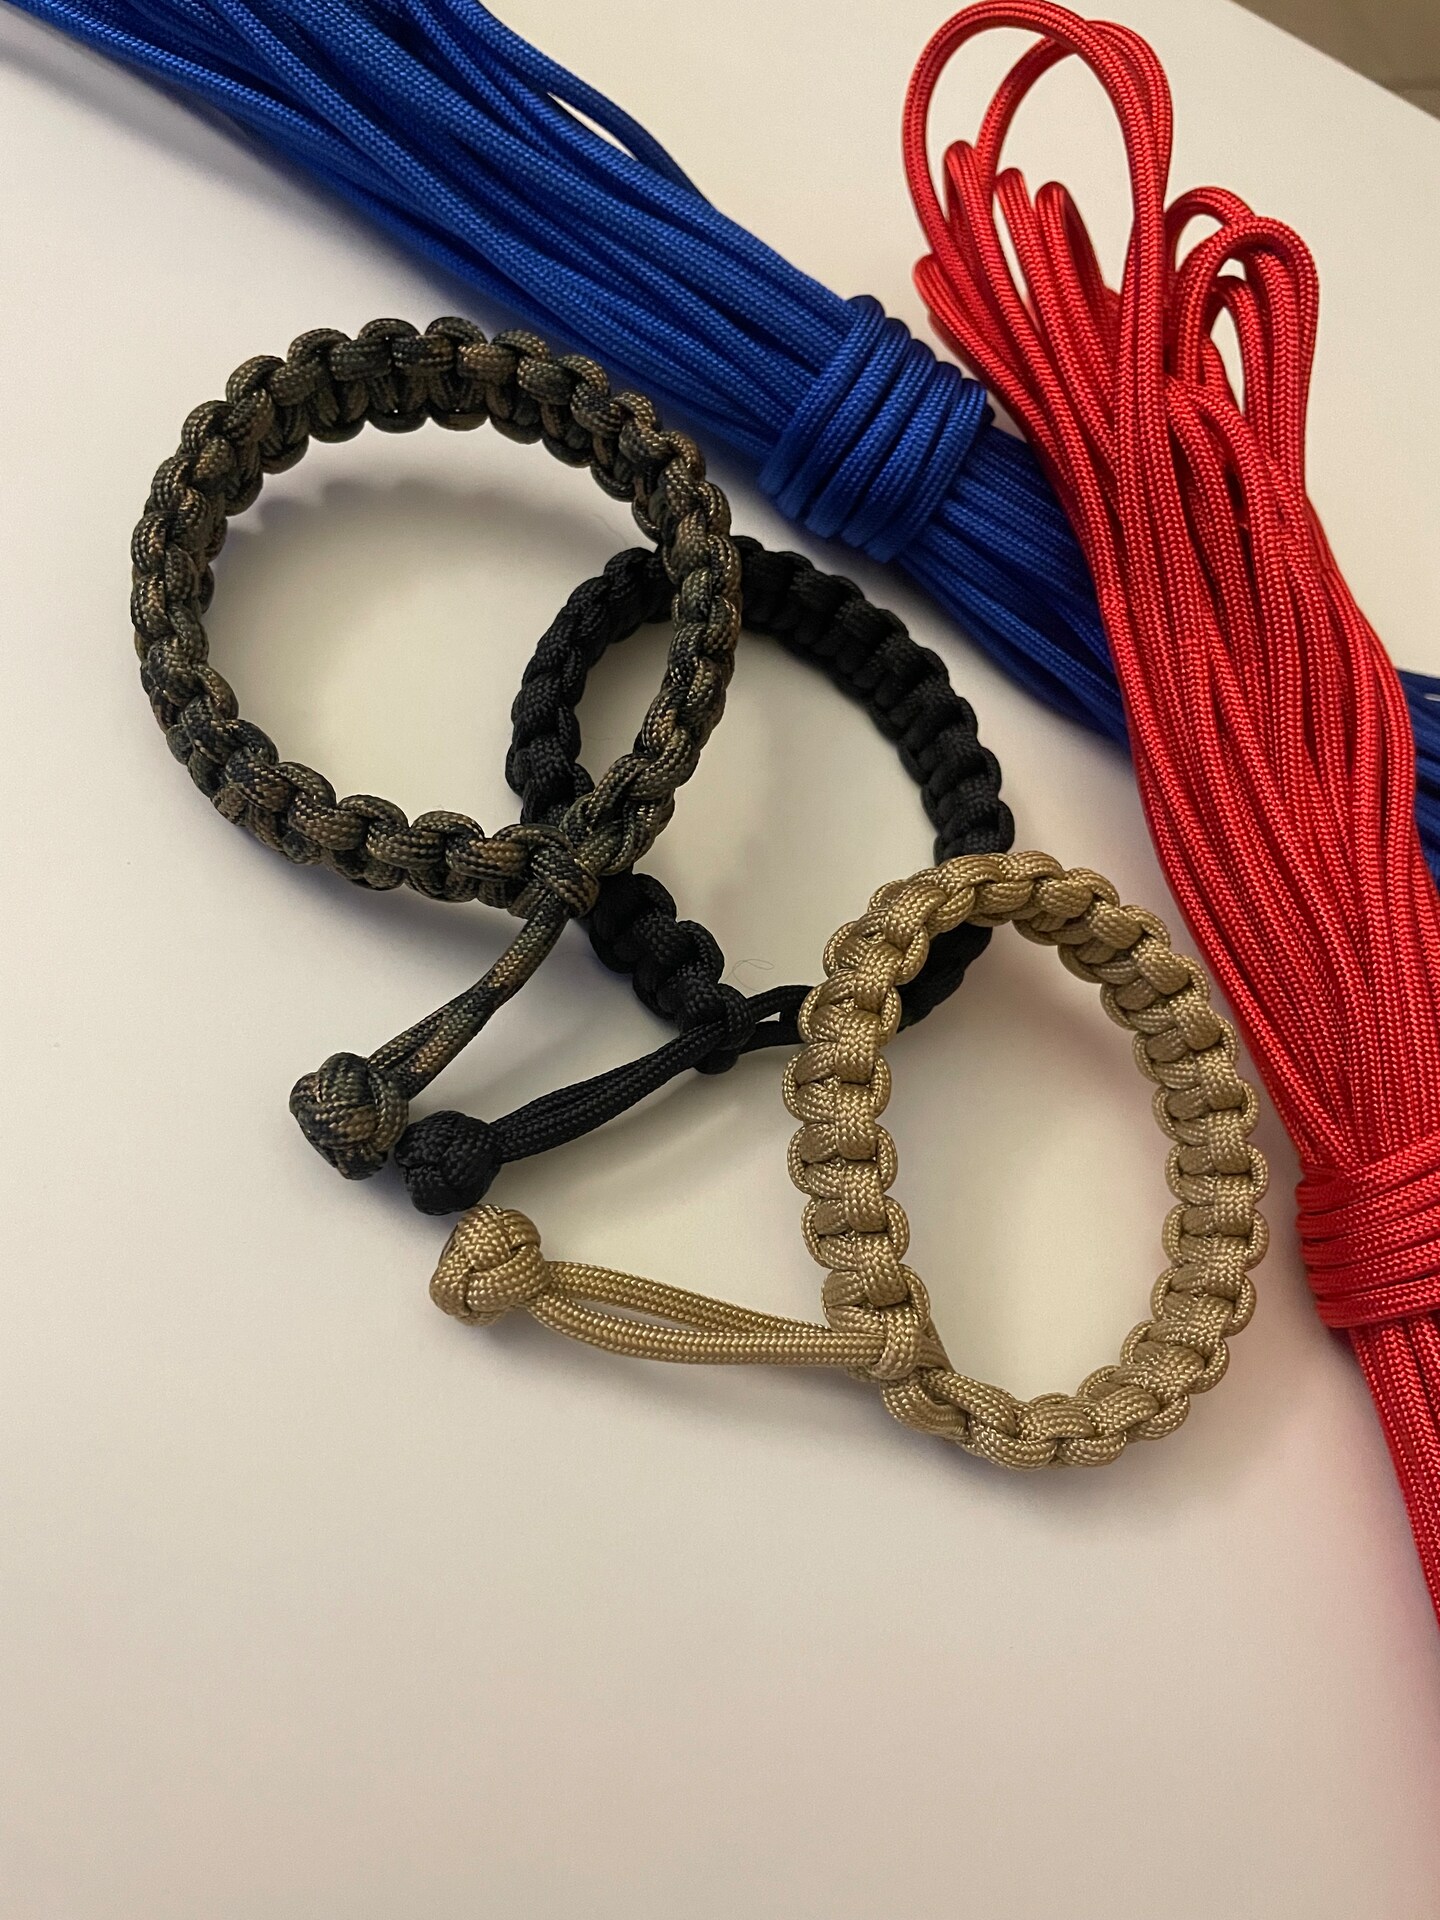 Make A Super Simple Twisted Paracord Bracelet